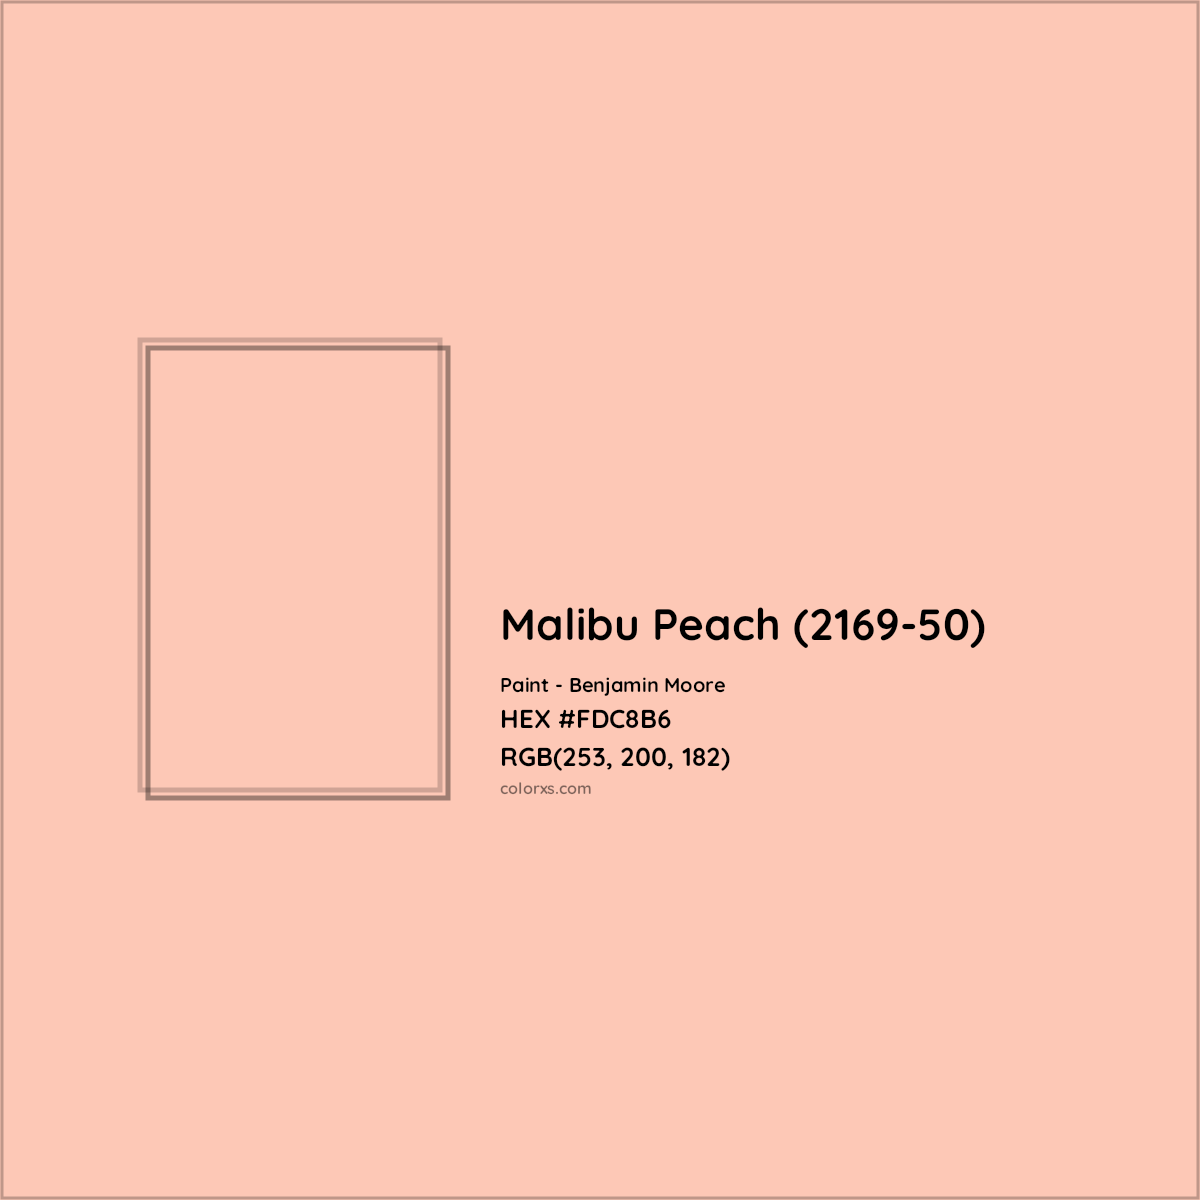 HEX #FDC8B6 Malibu Peach (2169-50) Paint Benjamin Moore - Color Code